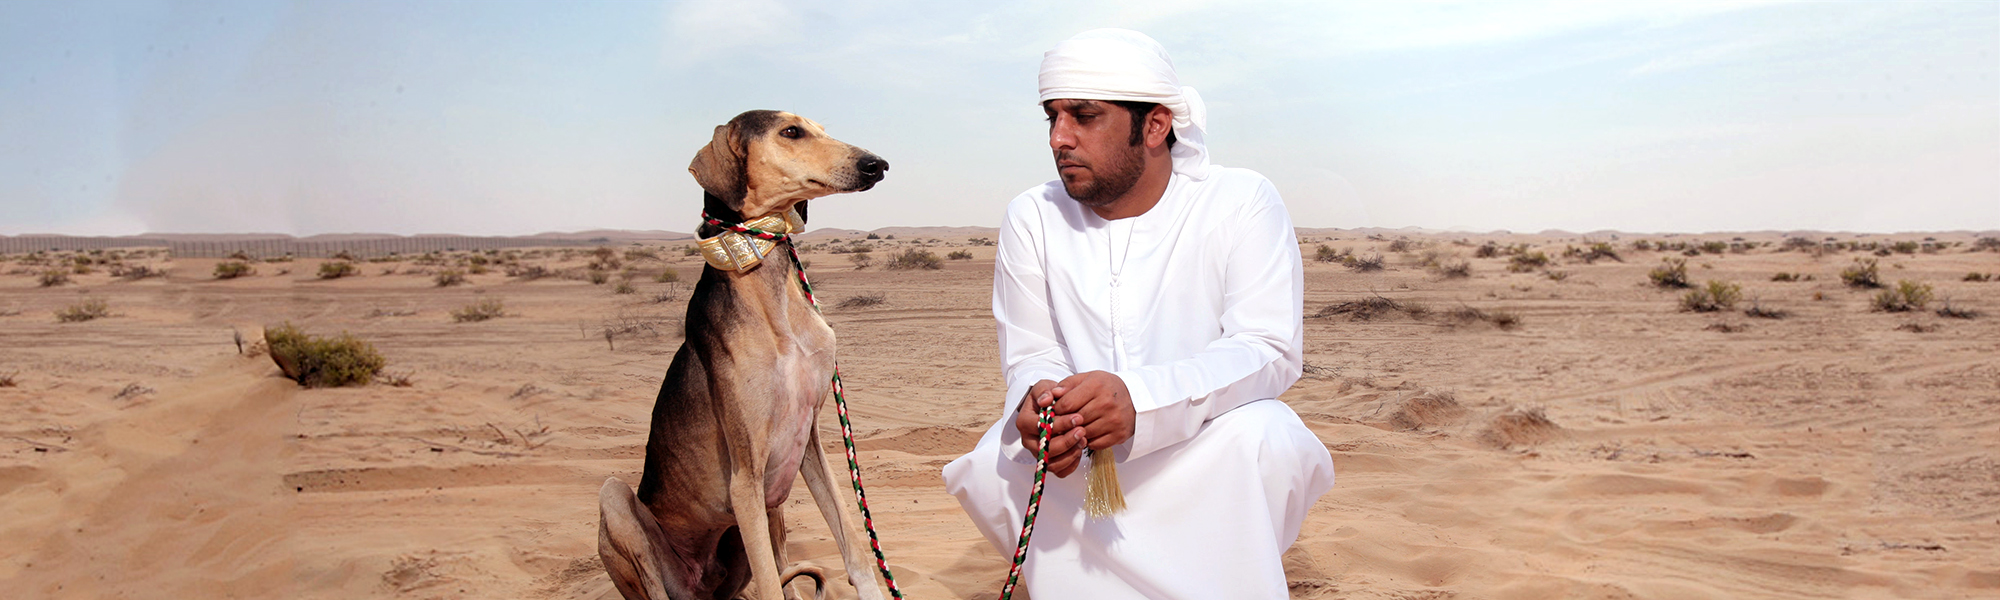 Saluki Dogs  Abu  Dhabi  Culture